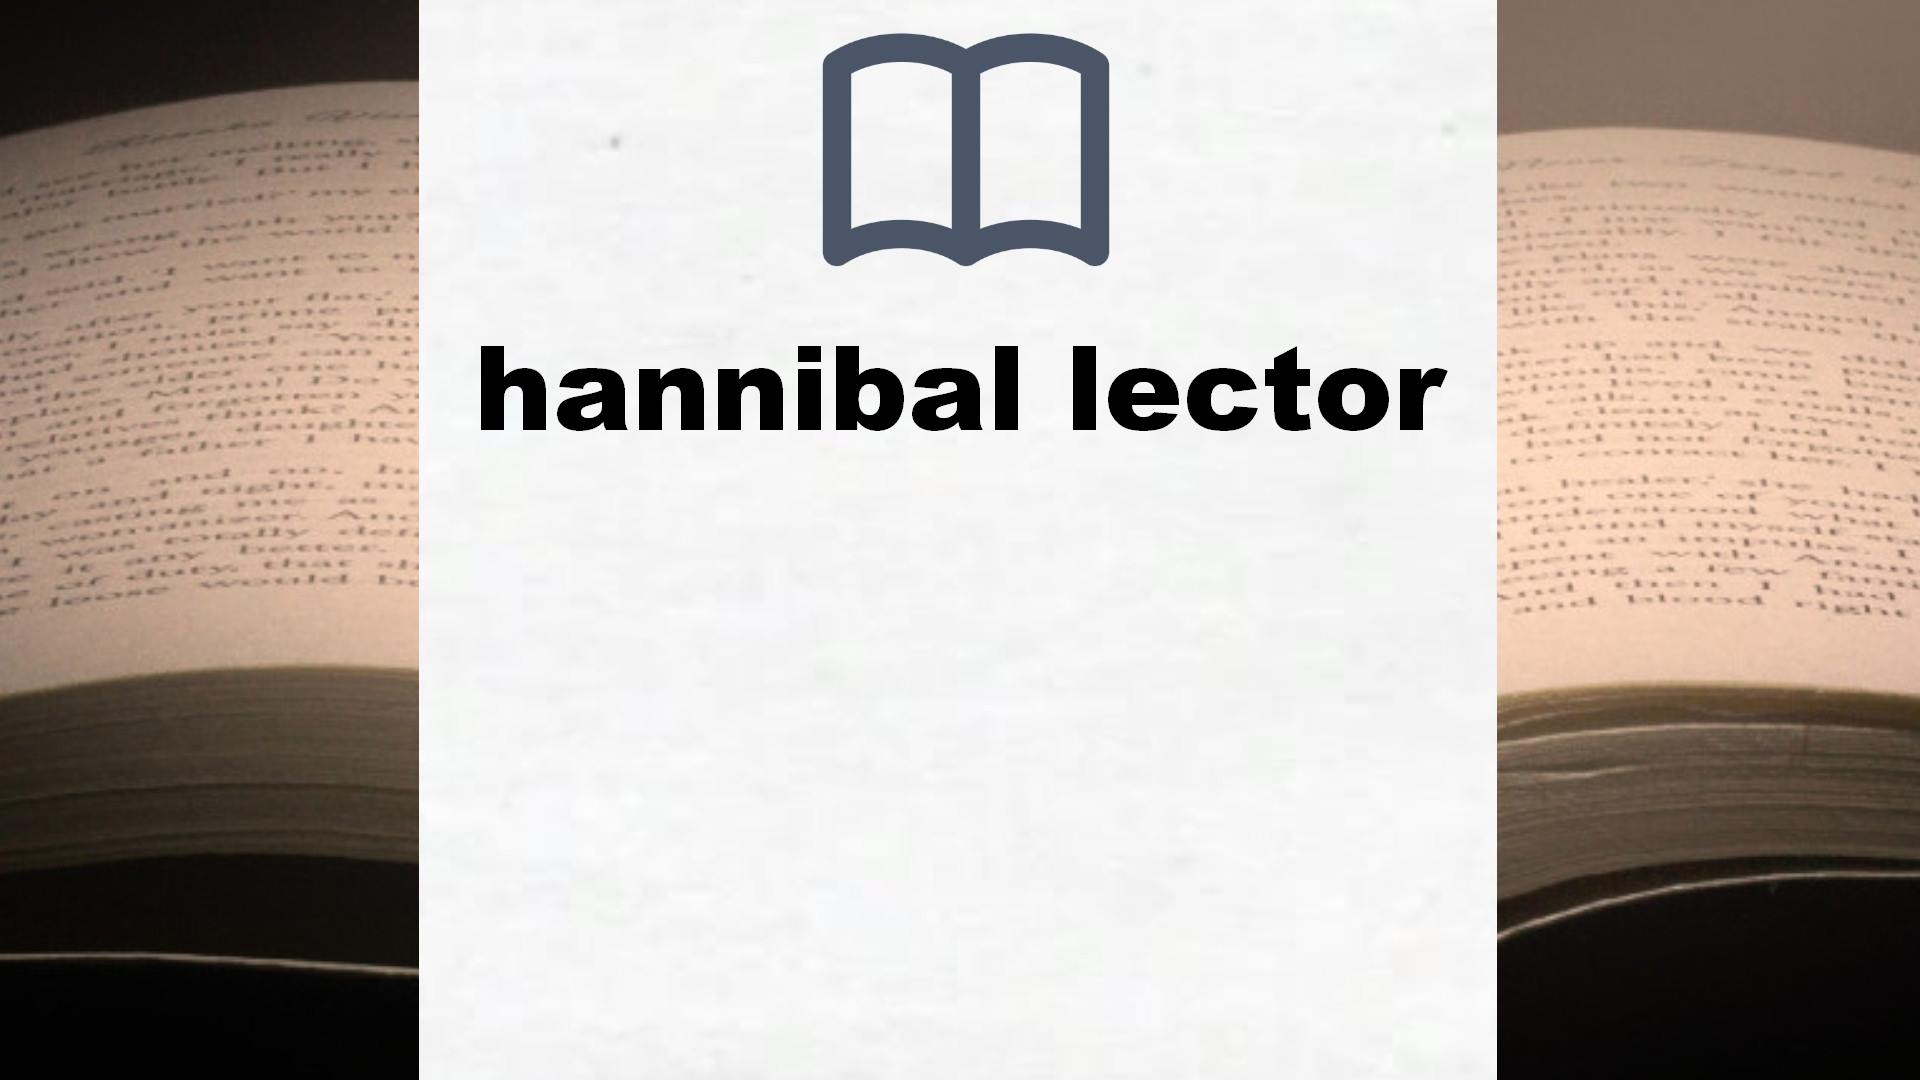 Libros sobre hannibal lector